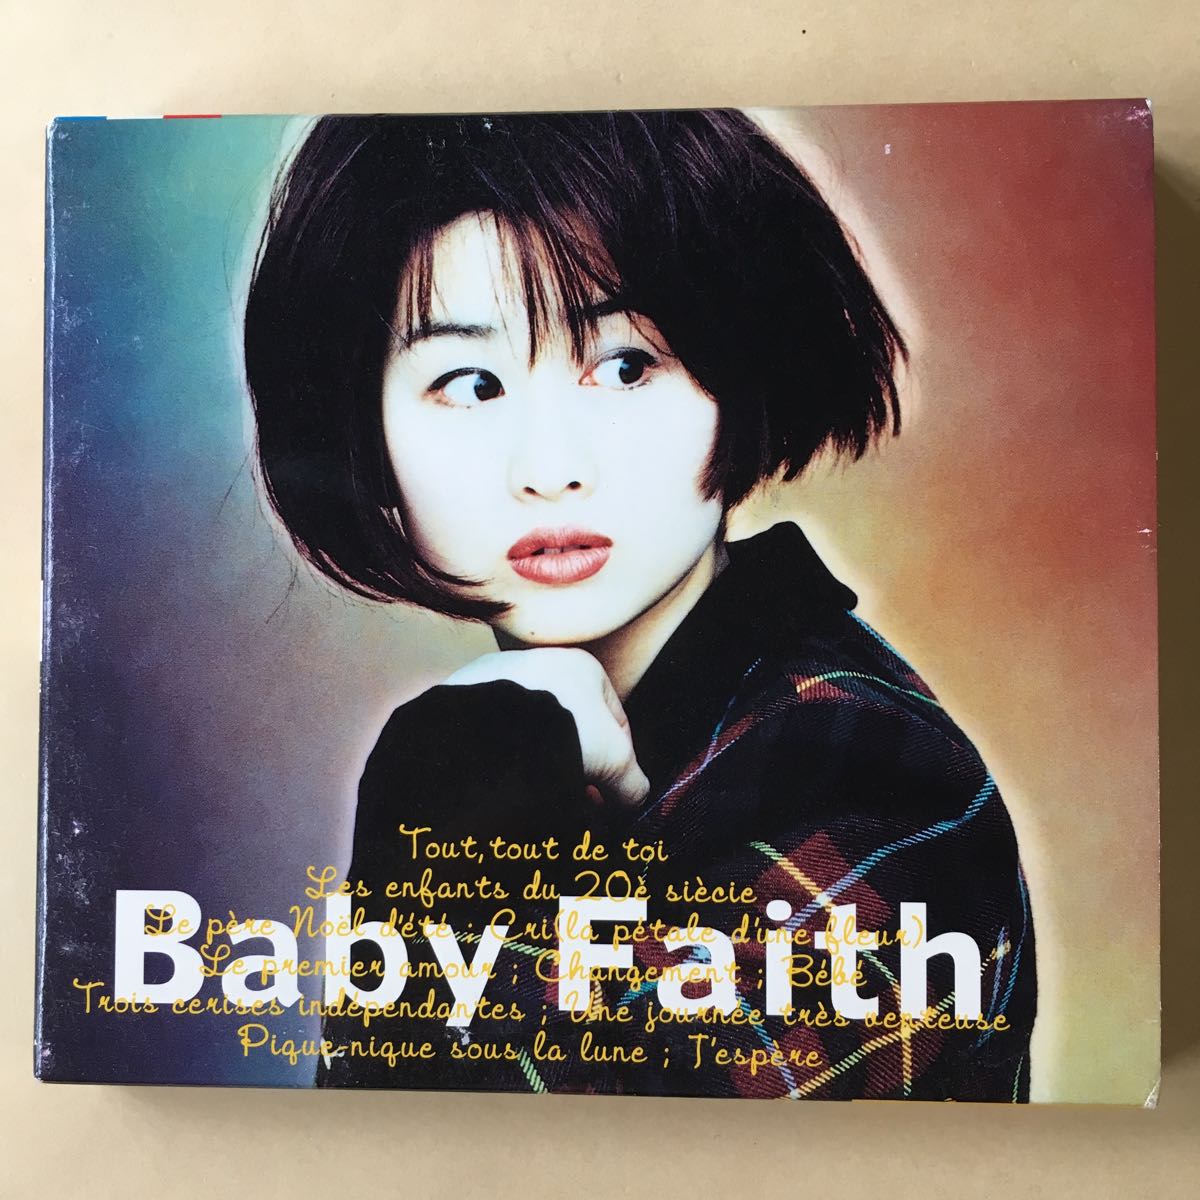 渡辺美里 日本製 1CD Baby 適当な価格 Faith .